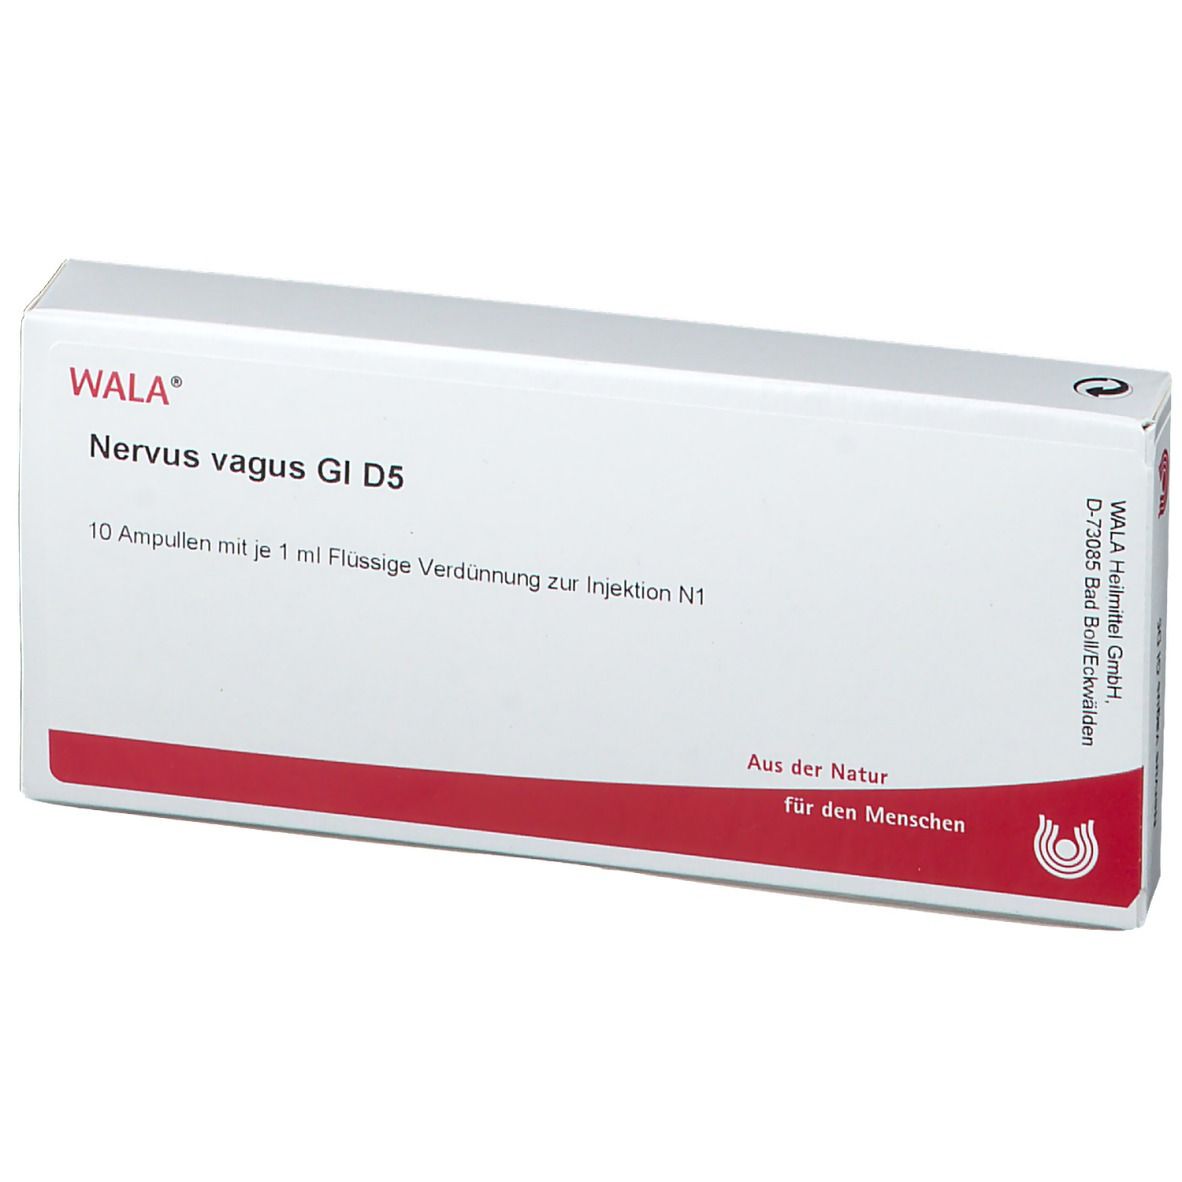 WALA® Nervus vagus Gl D 5